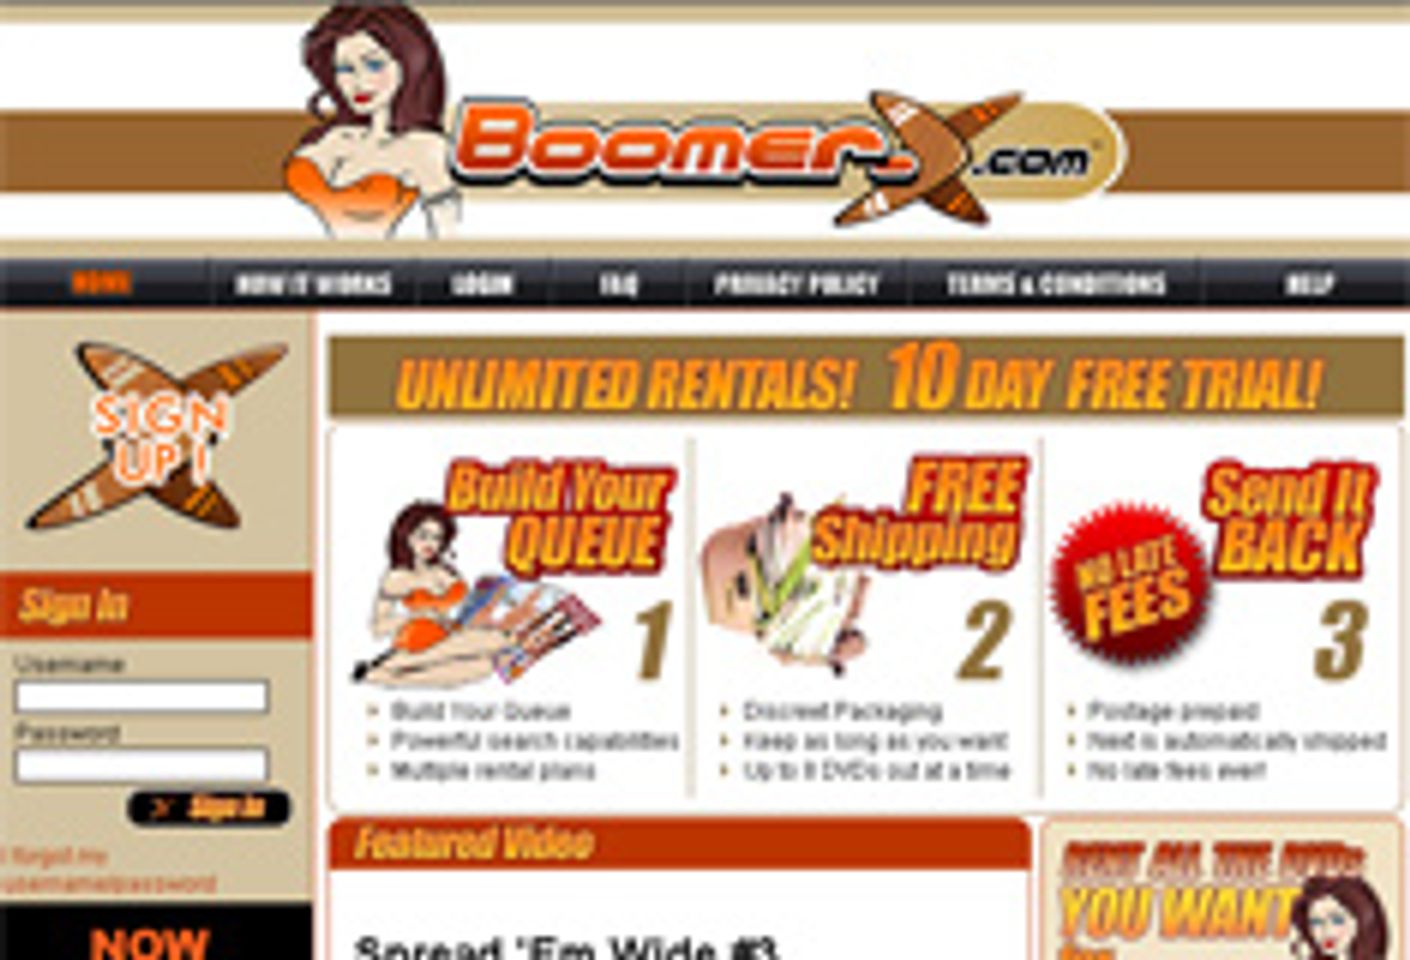 Boomer-X.com Adds Two-Week Rental Plan